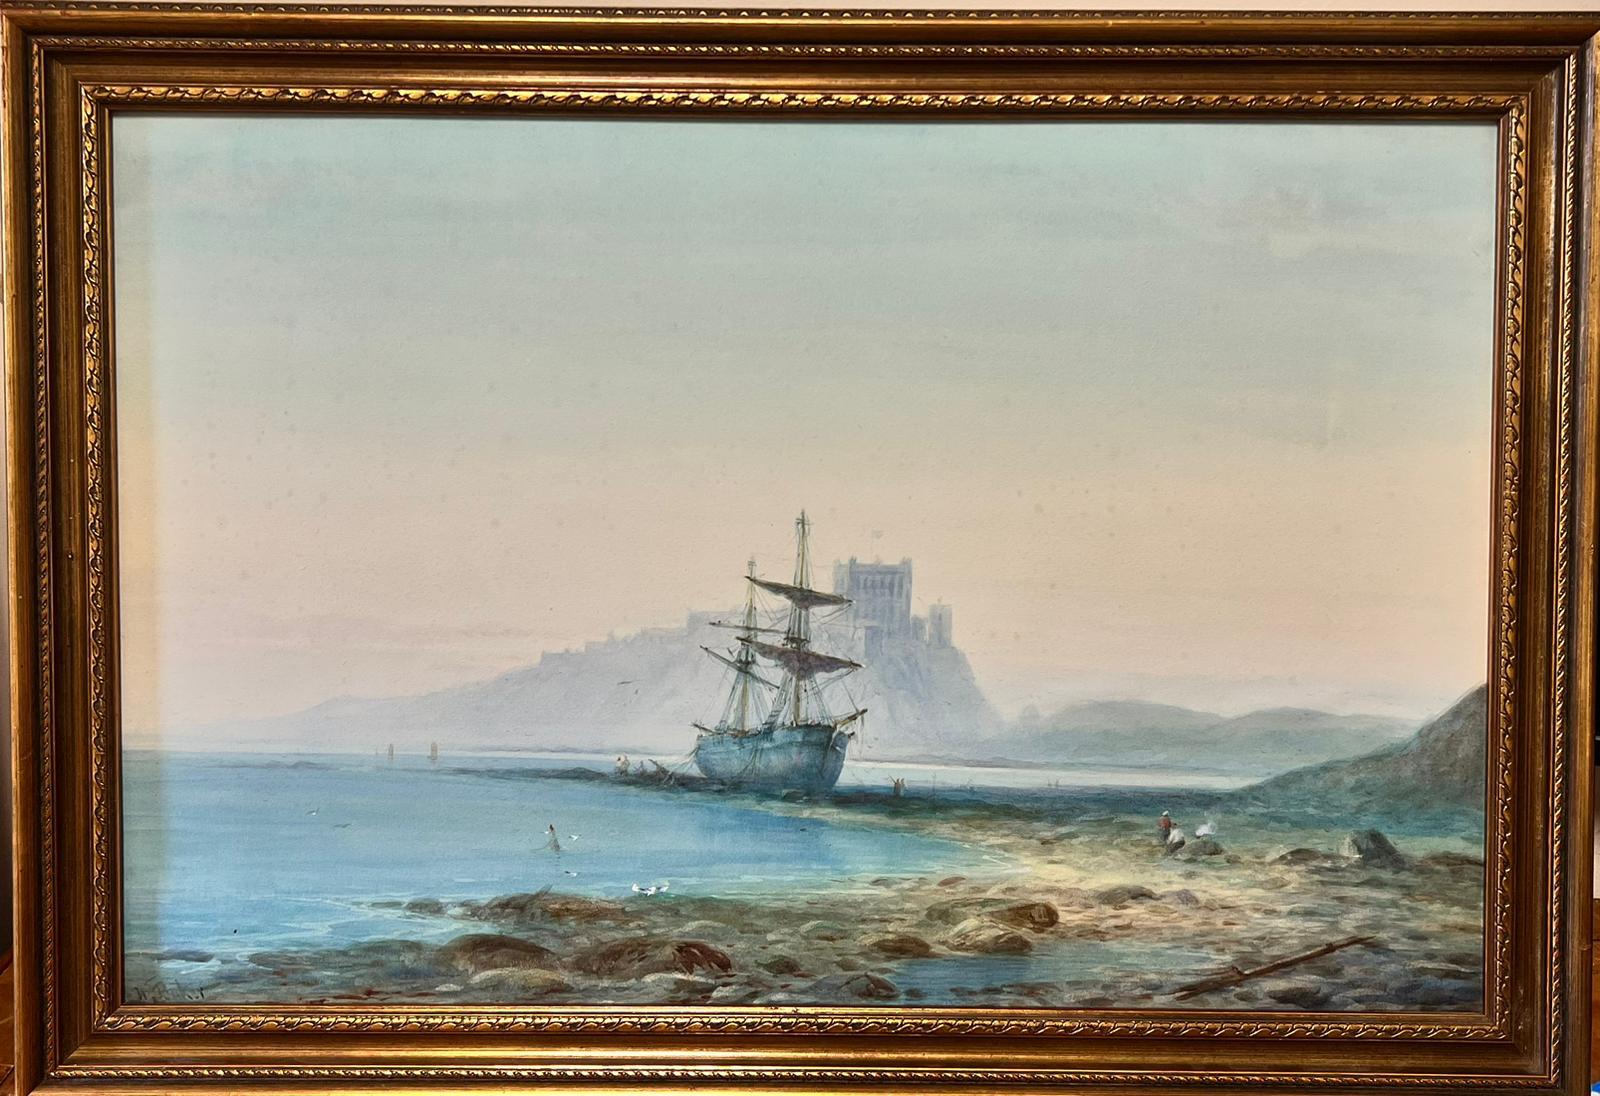 Antique English Marine Landscape Art - Antique British Marine Painting Classic Tallship Beached on Shore with Castle 